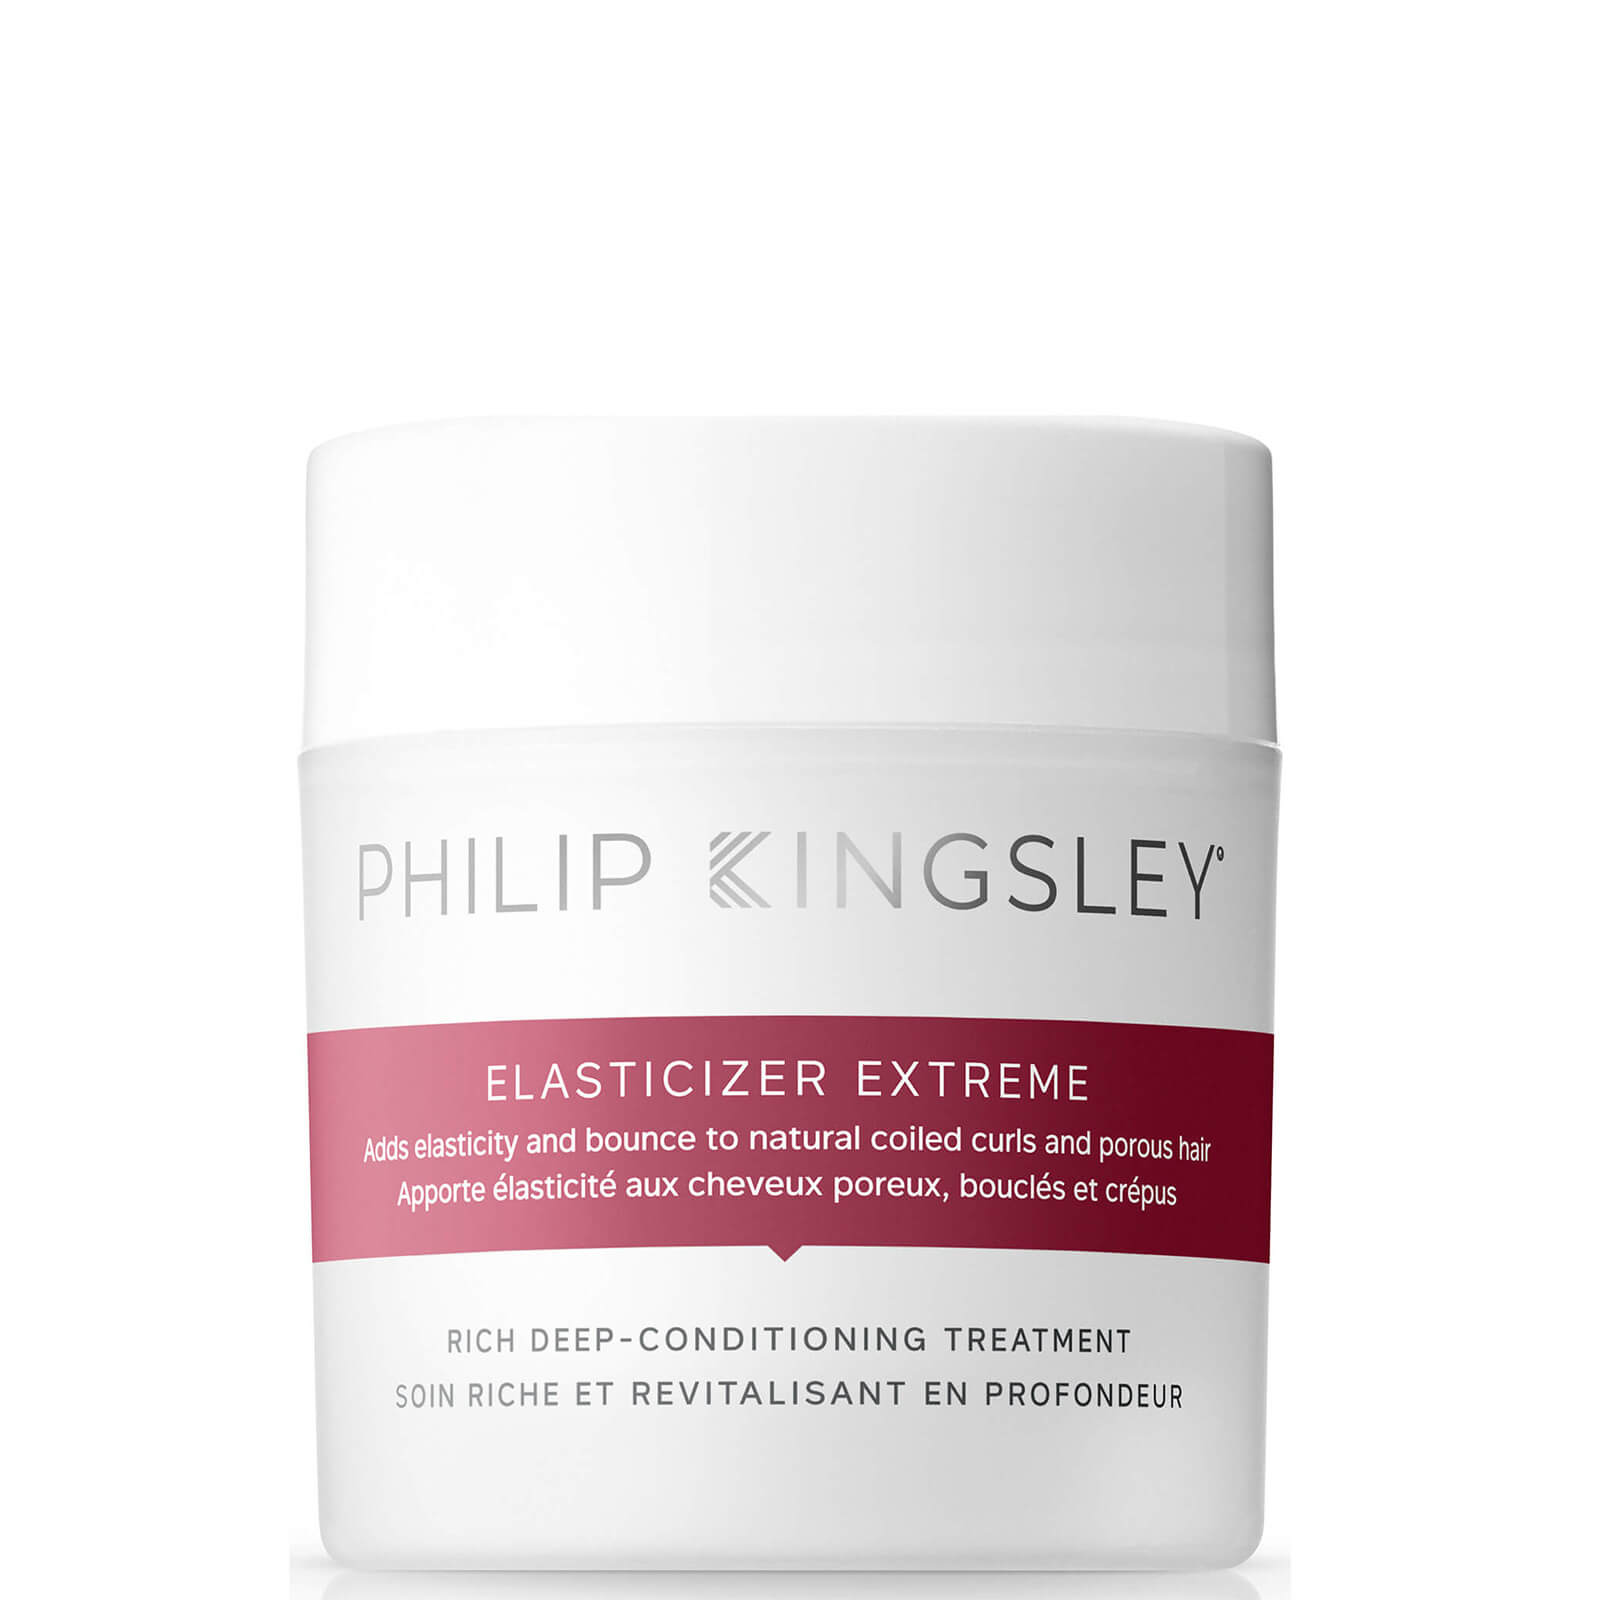 Philip Kingsley Elasticizer Extreme Rich Deep-Conditioning Treatment 150ml lookfantastic.com imagine